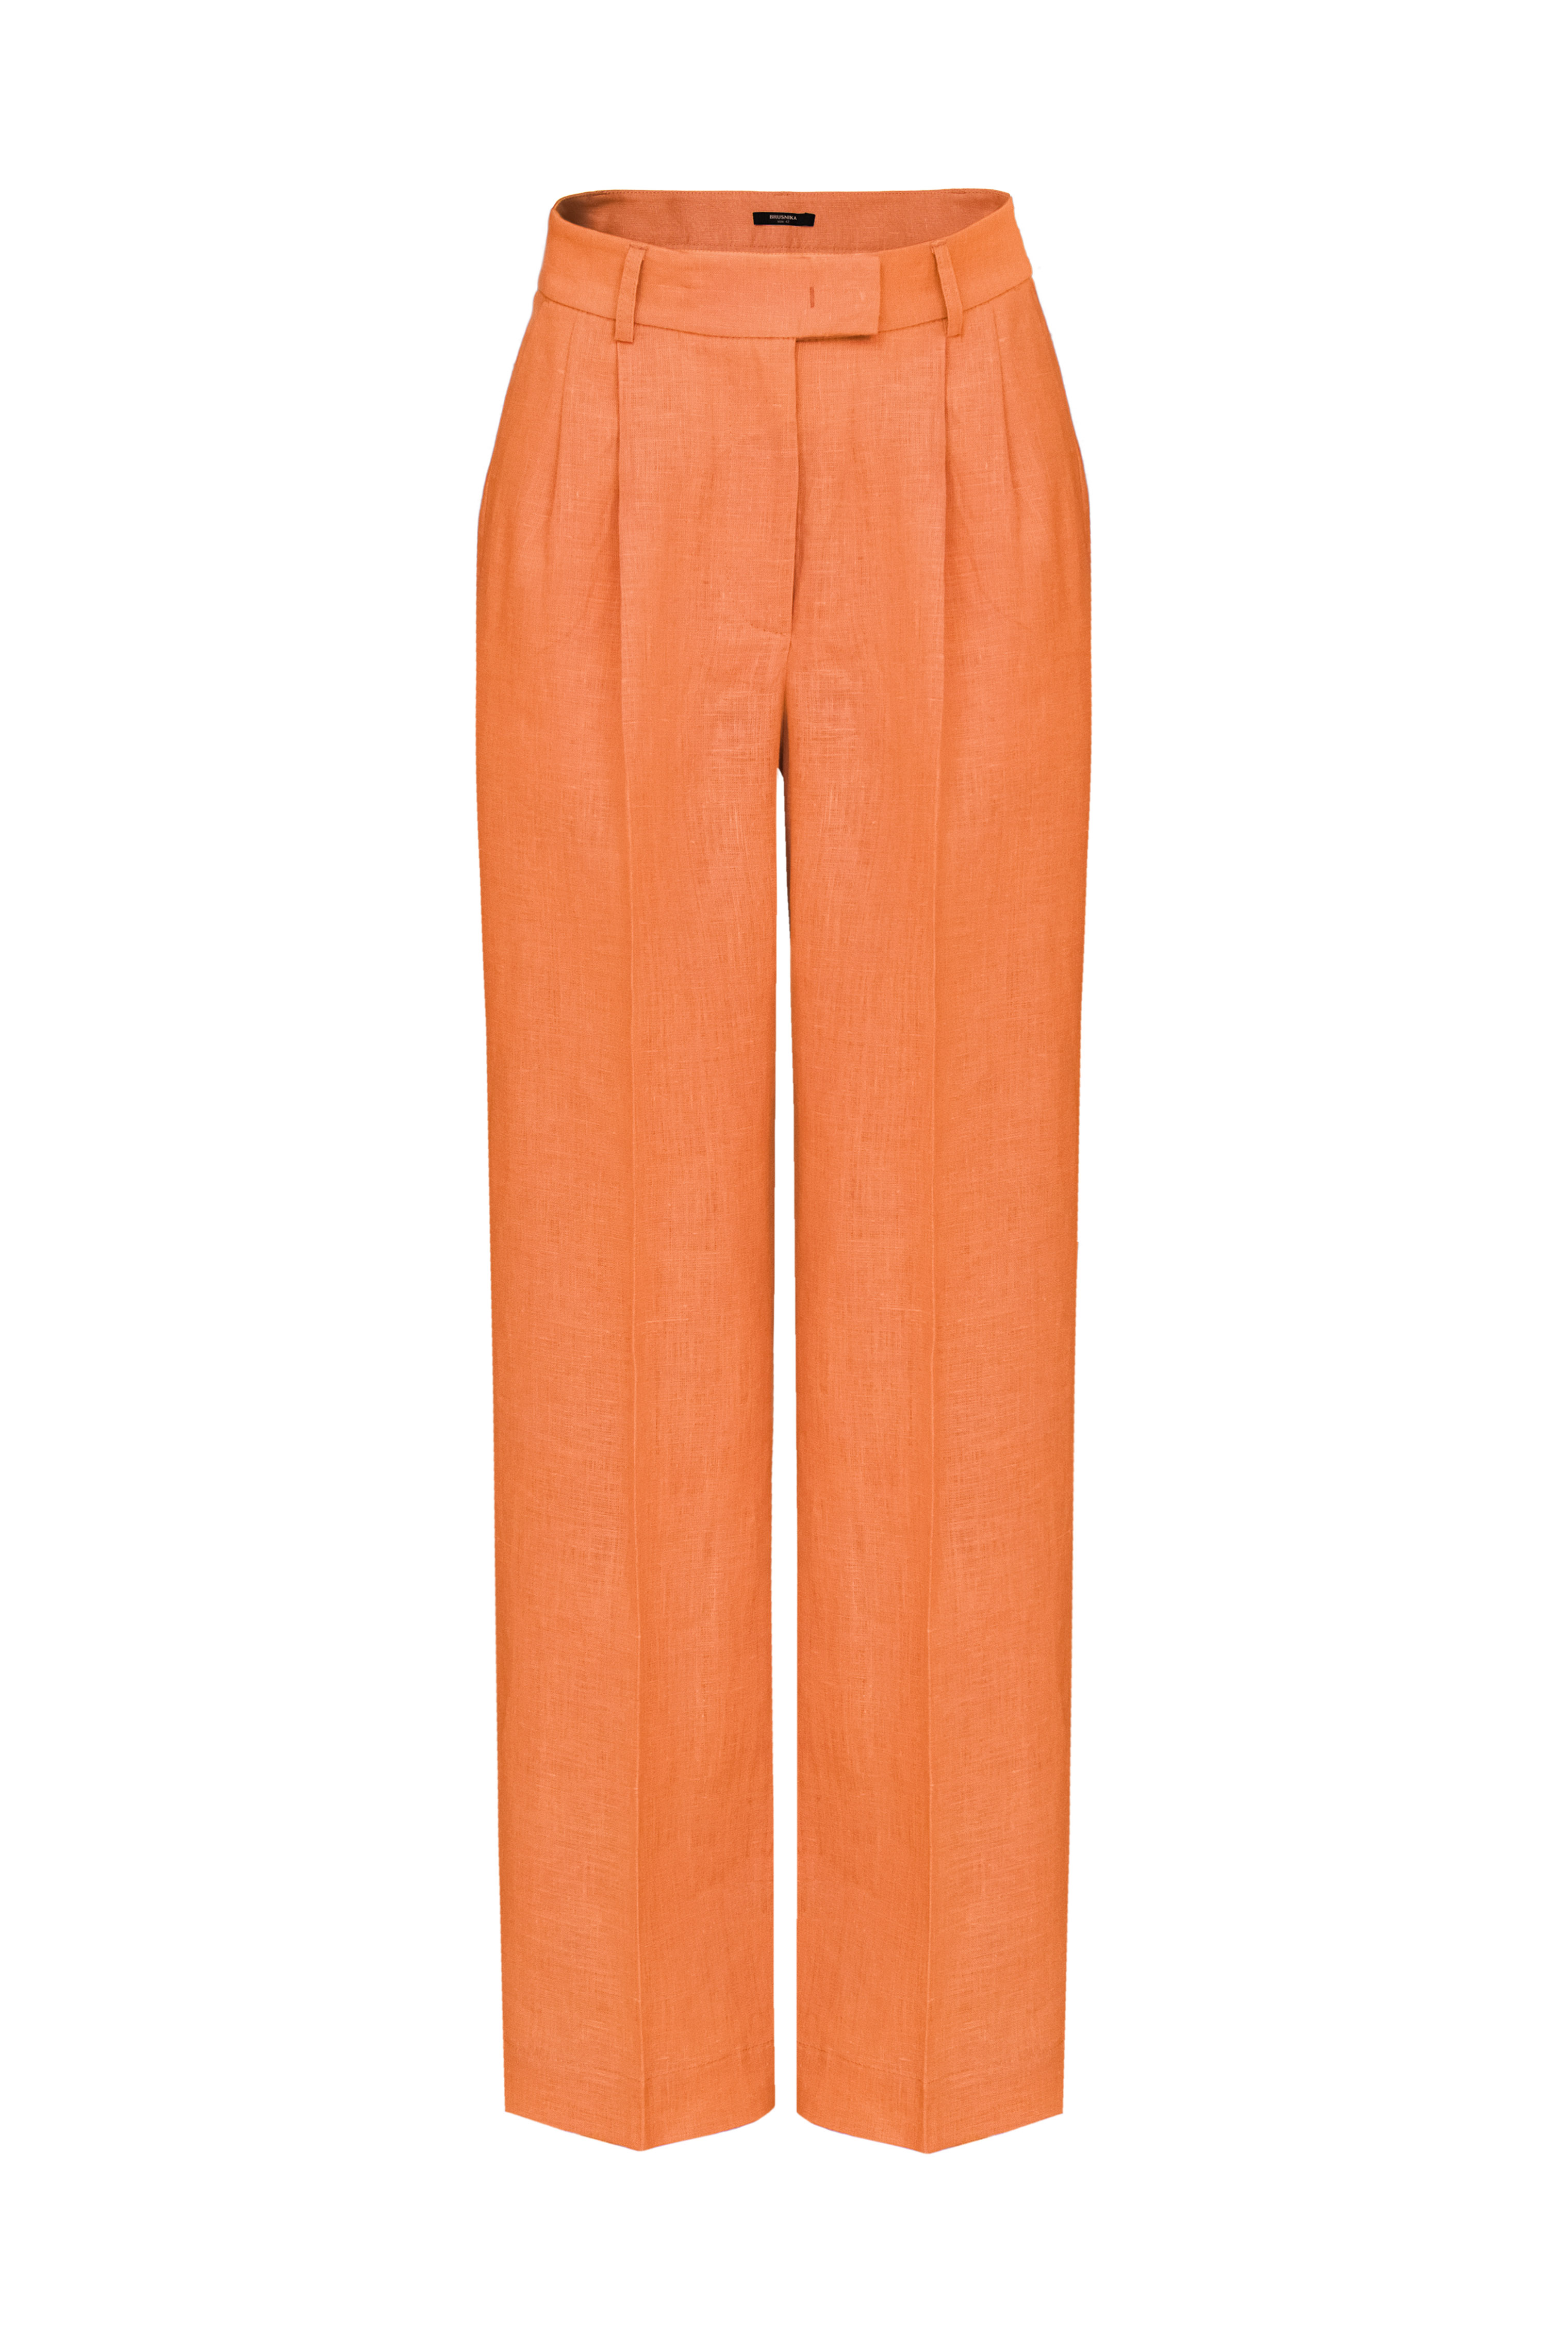 Trousers 4502-48 Orange from BRUSNiKA